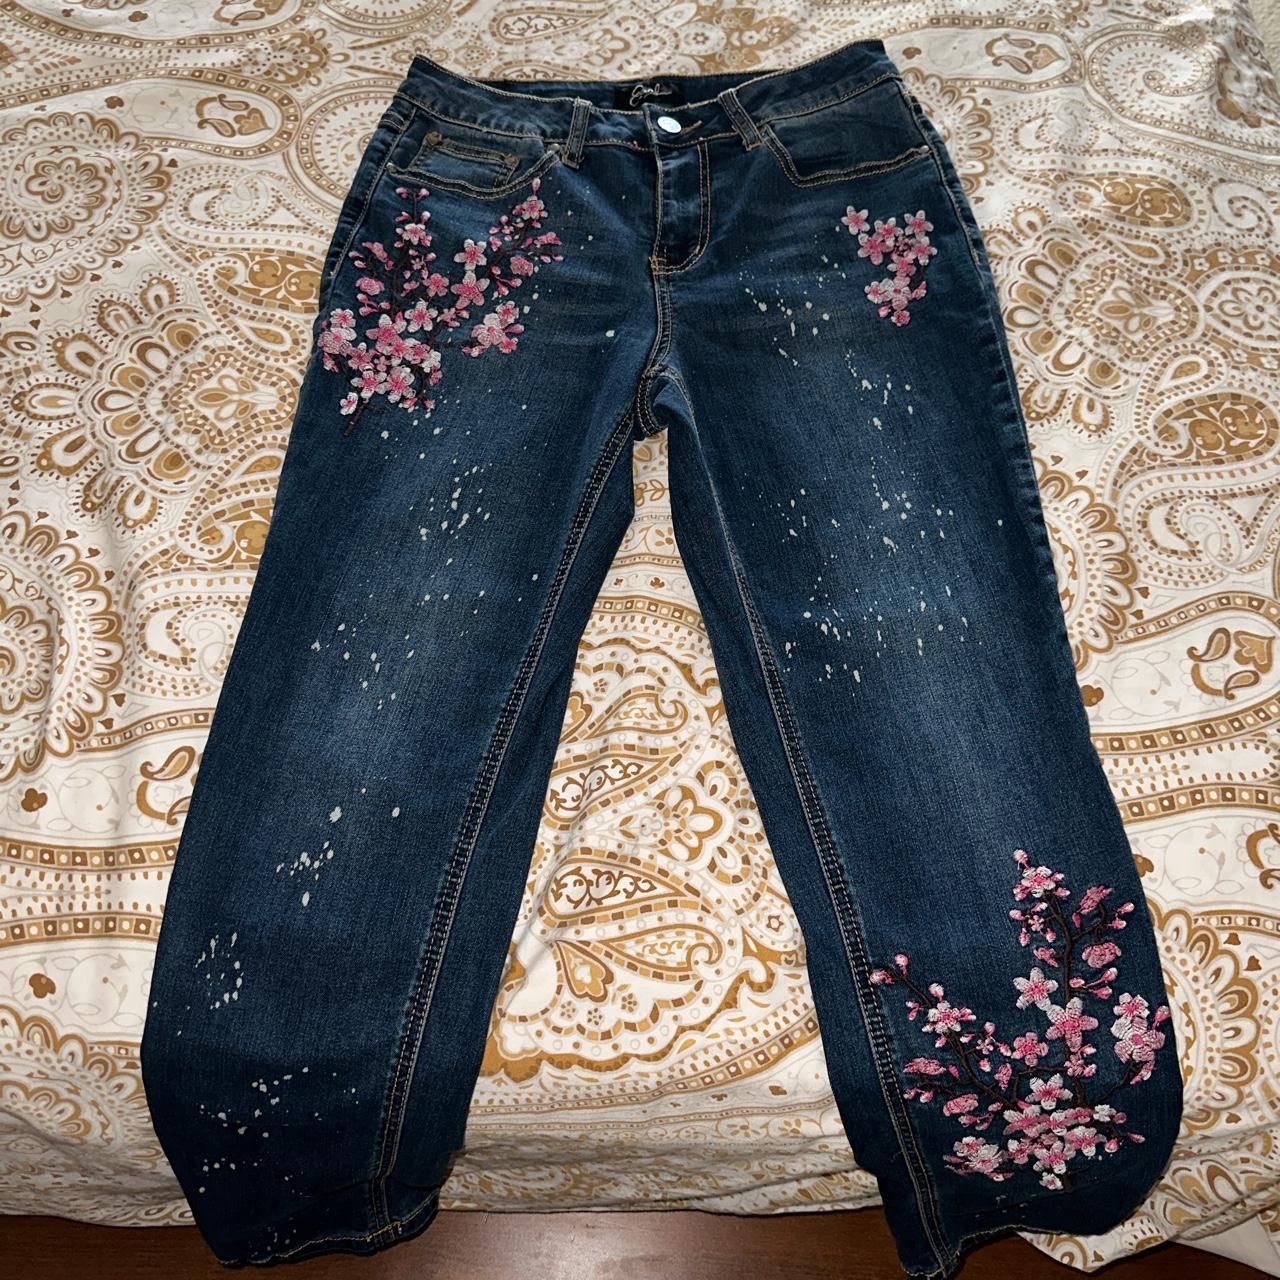 Cute cherry Blossom jeans #cherryblossom #jeans - Depop